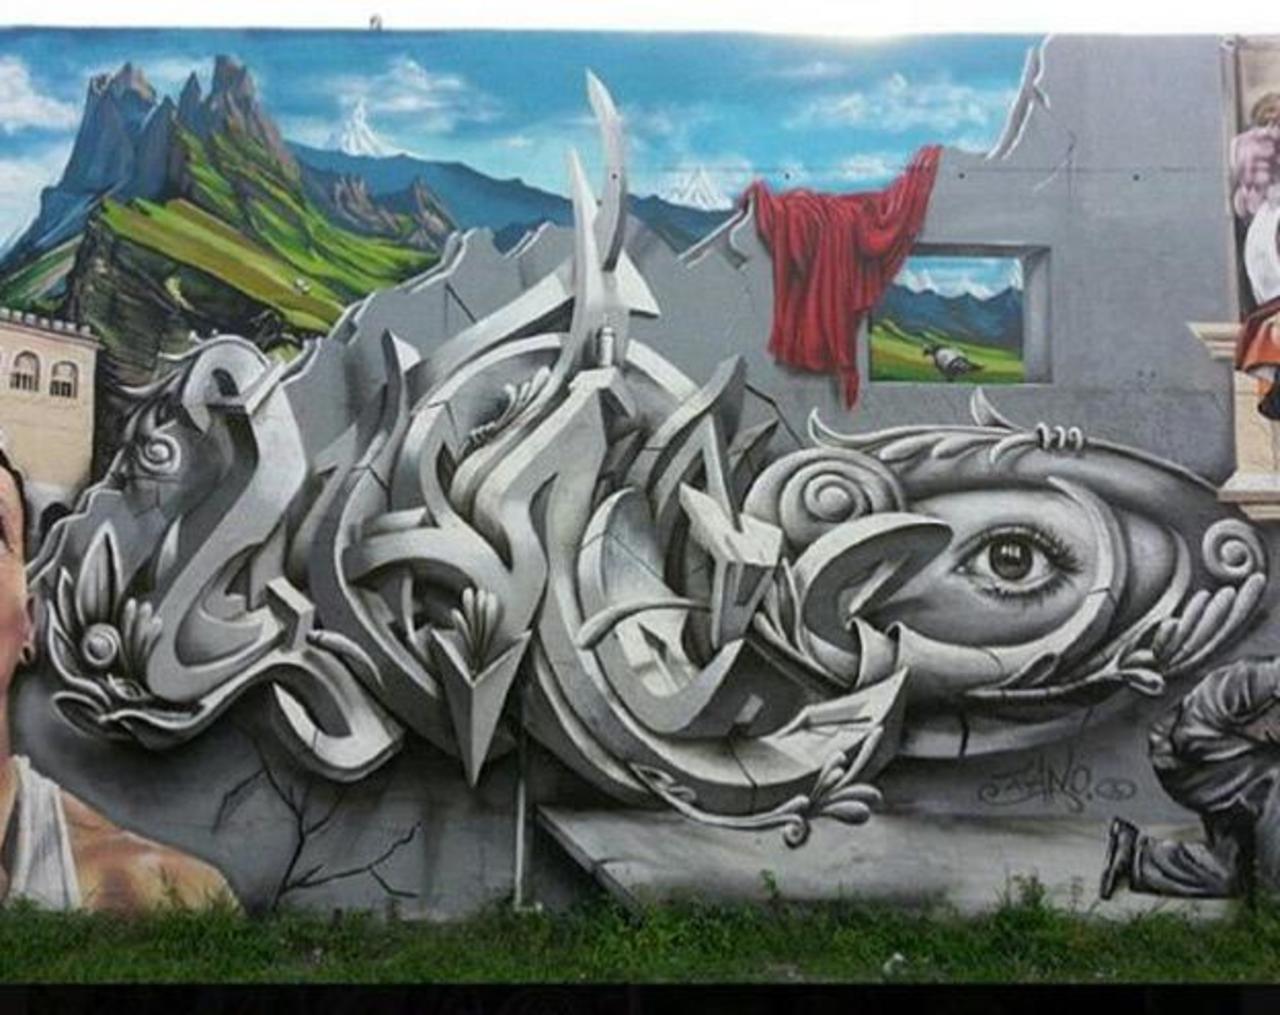 Street Art by Smog One

#art #mural #graffiti #streetart http://t.co/WAeuhjsBMO